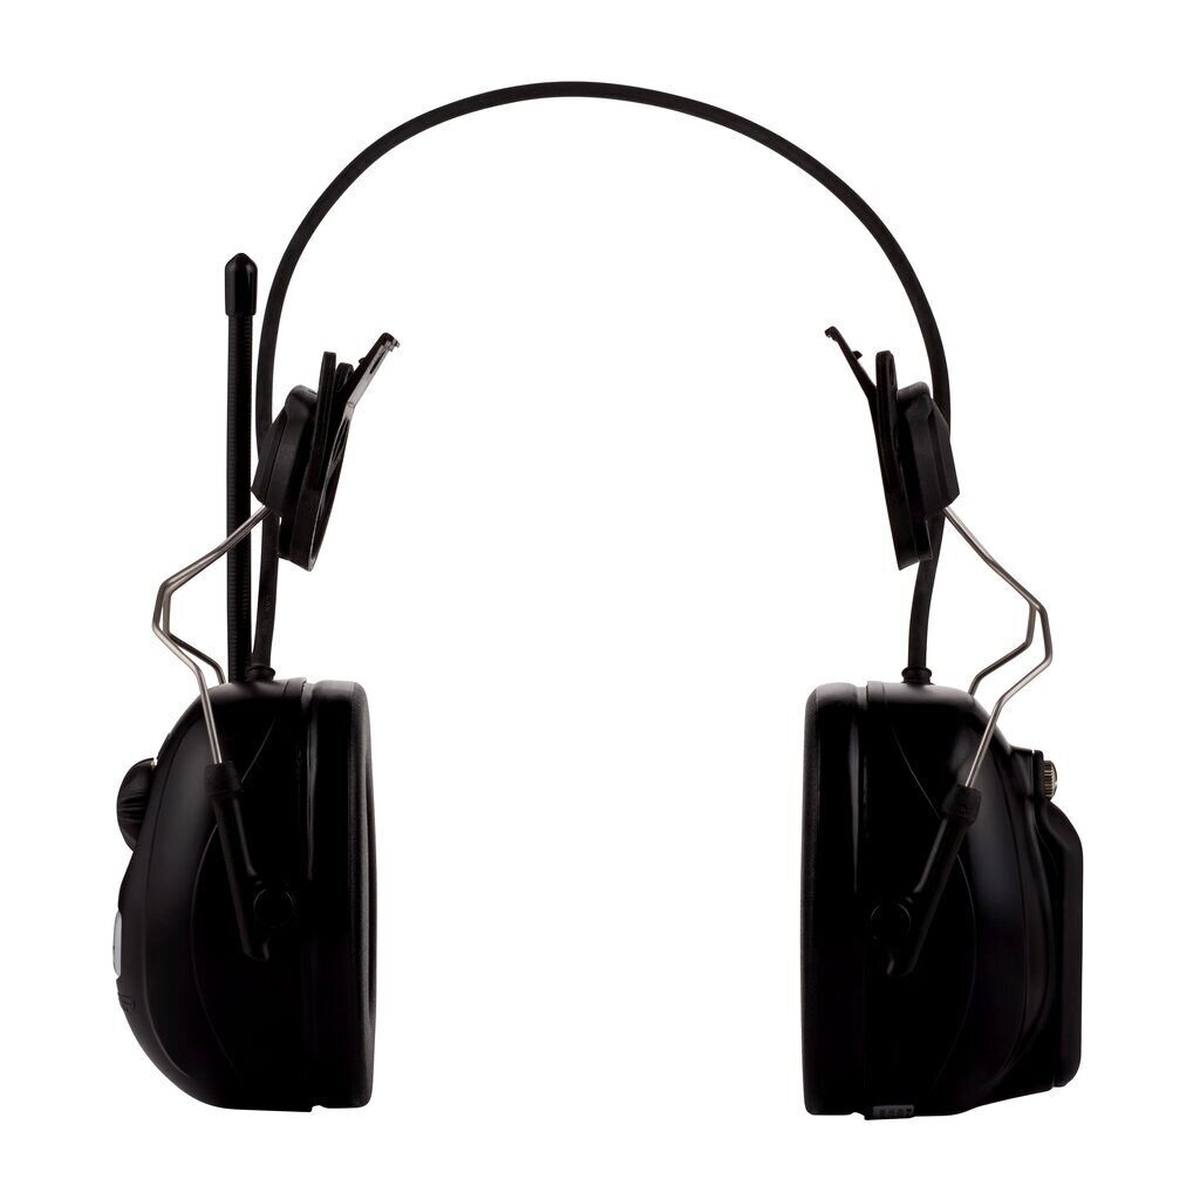 3M Peltor Radio DAB FM, noir, variante pour casque, SNR = 30 dB